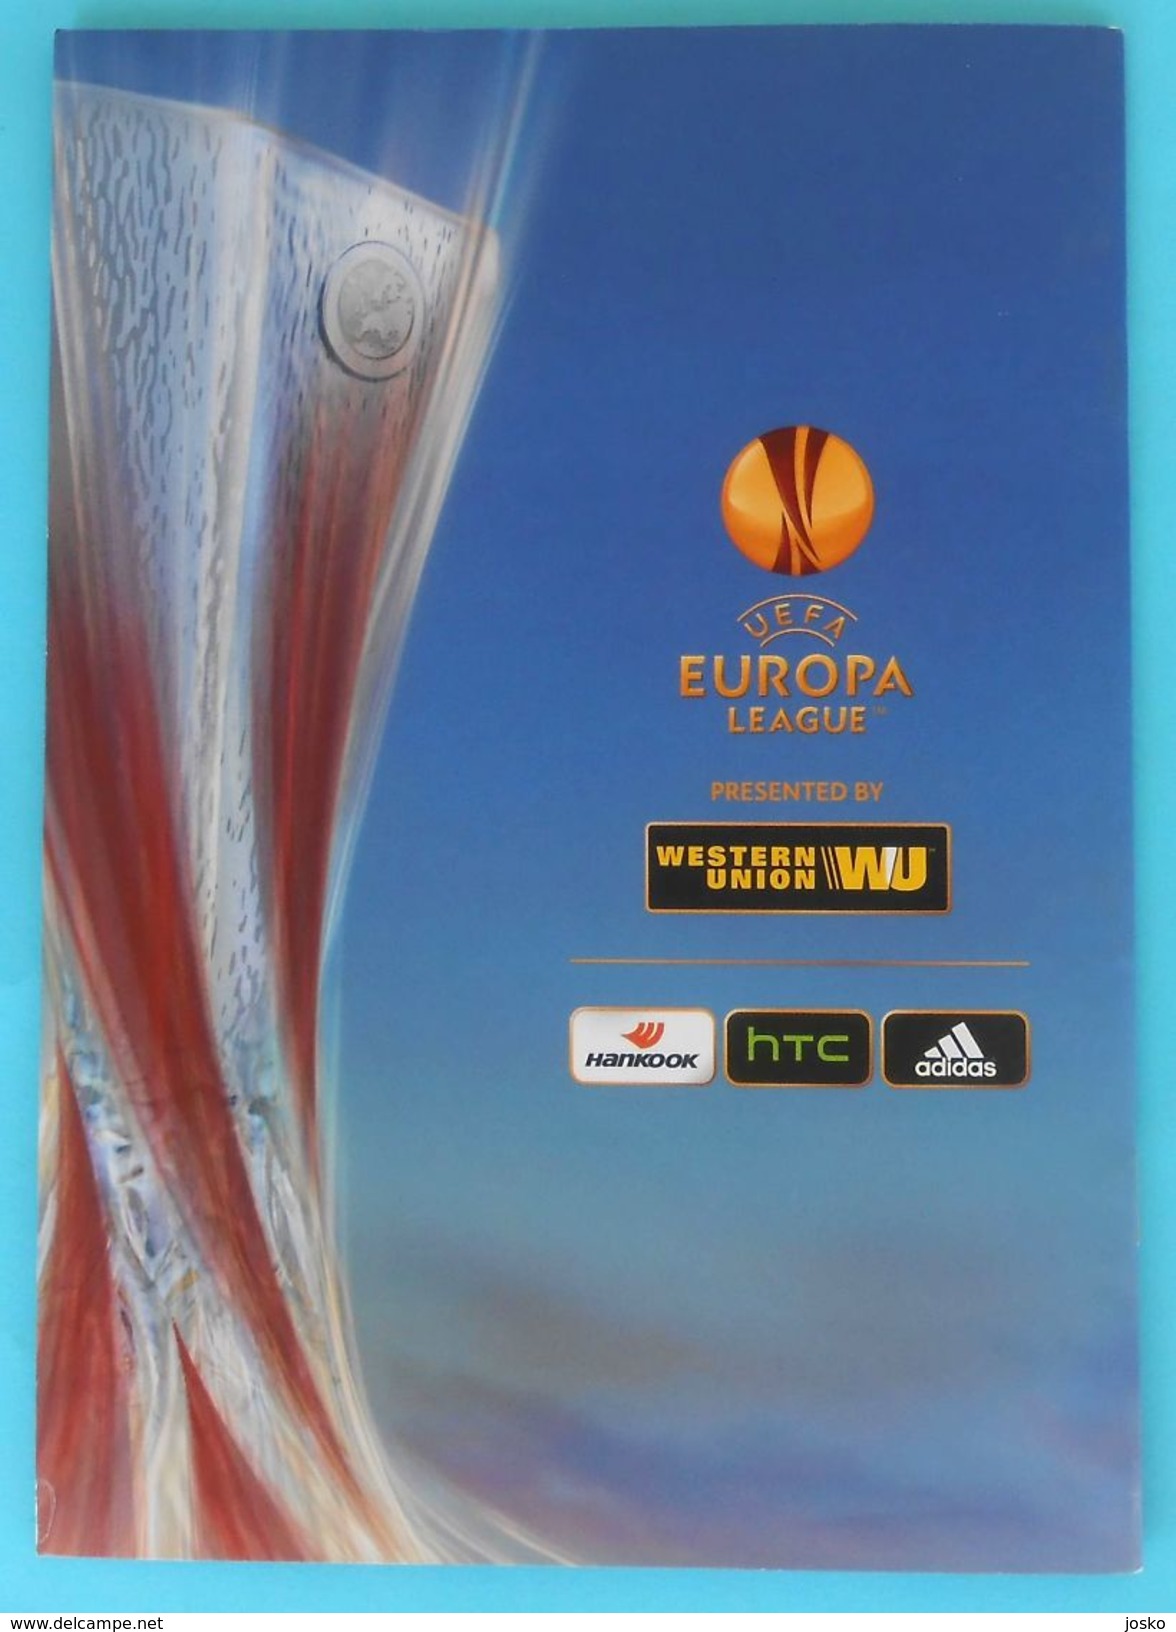 UEFA EUROPA LEAGUE 2014/15. - GROUP D - Diinamo FC Celtic Astra Salzburg programme fussball programm programma programa